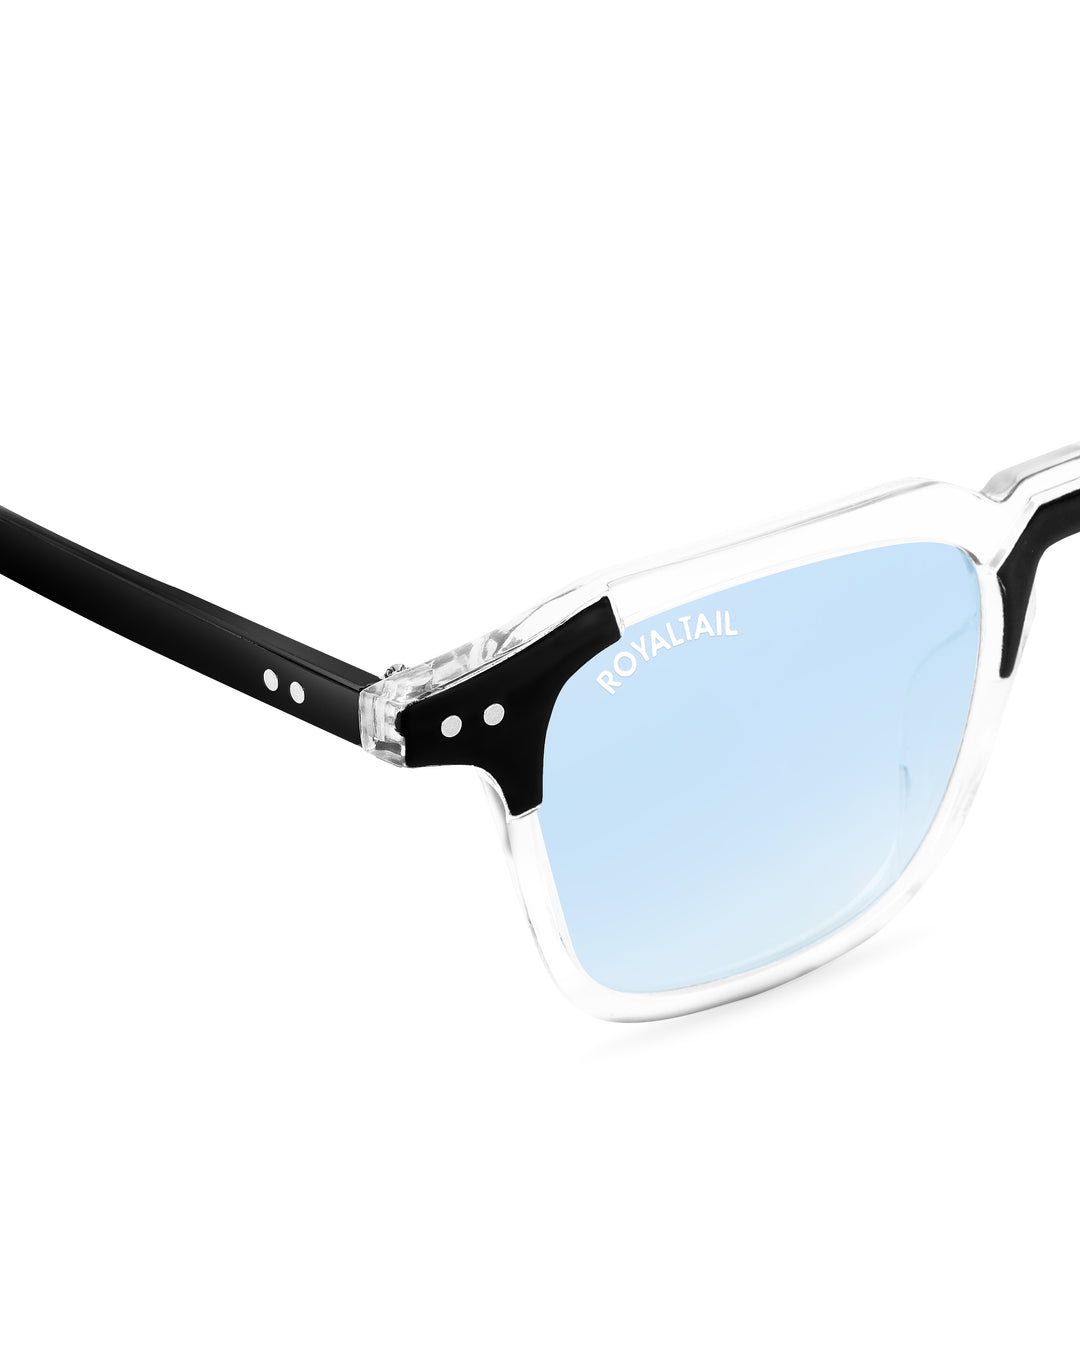 Sky Blue Glass and Black Frame Square Kingsman-06 Series Sunglasses - Royaltail